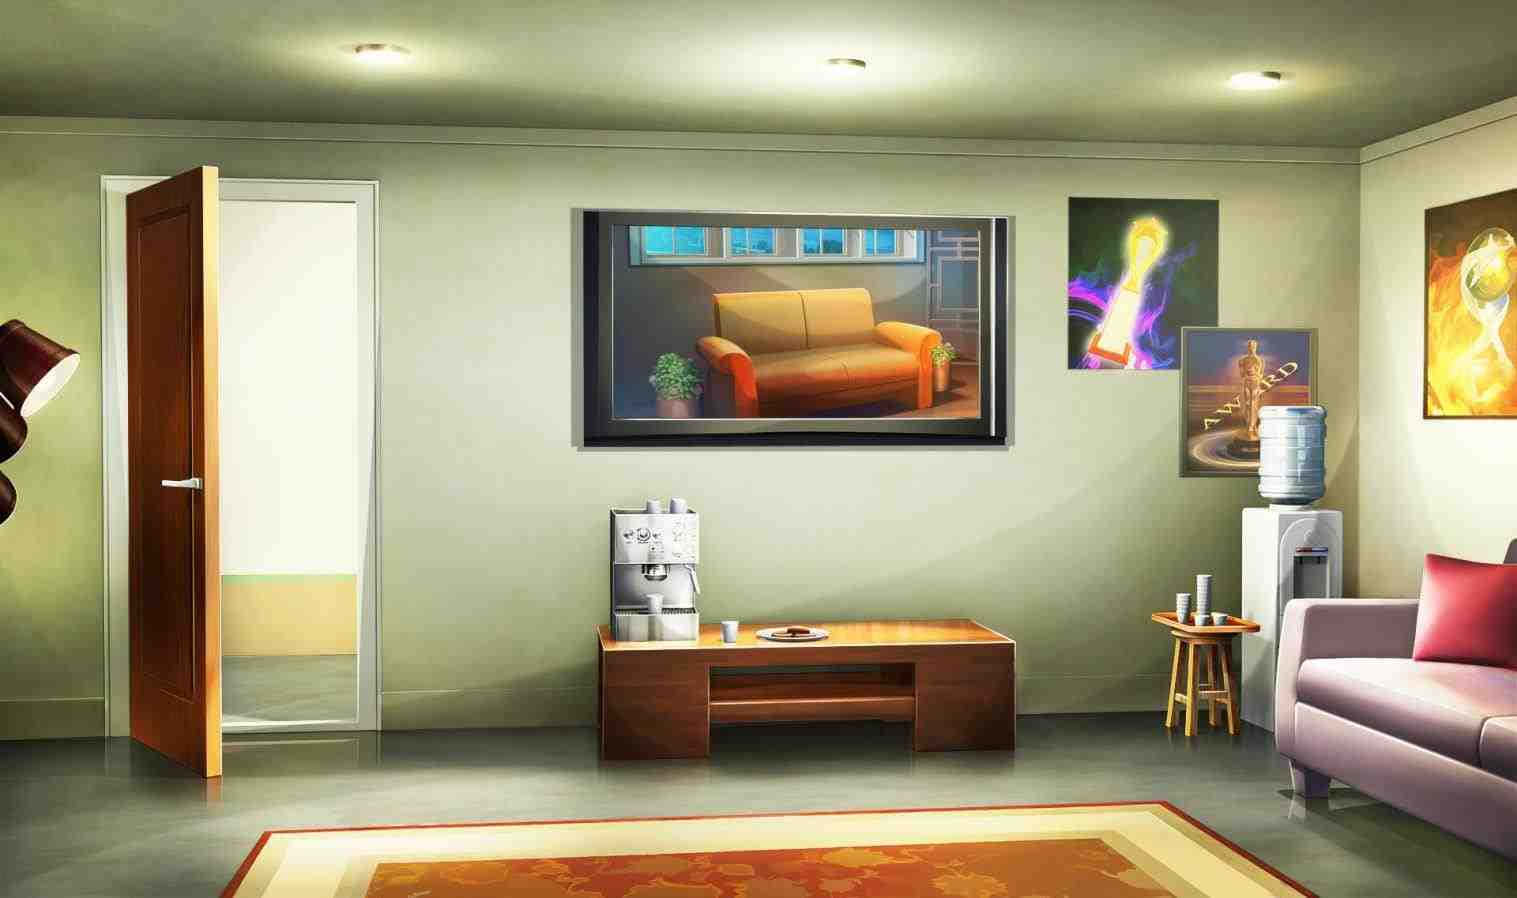 CreamyCake Production - Living Room Background